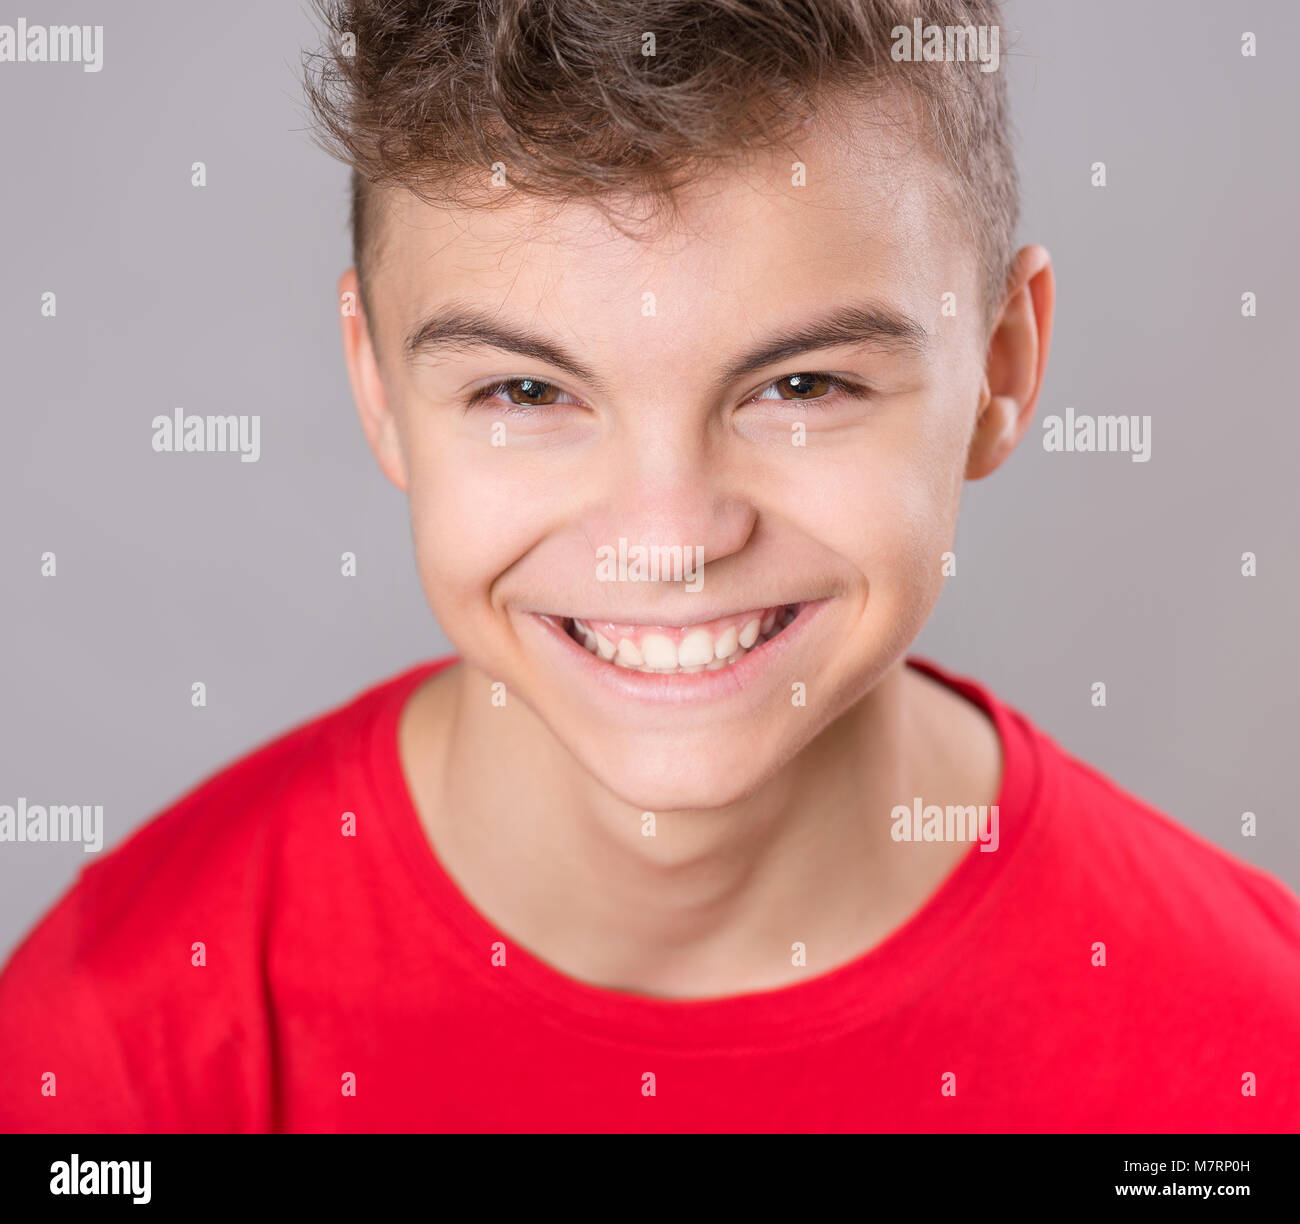 Teen boy portrait Stock Photo